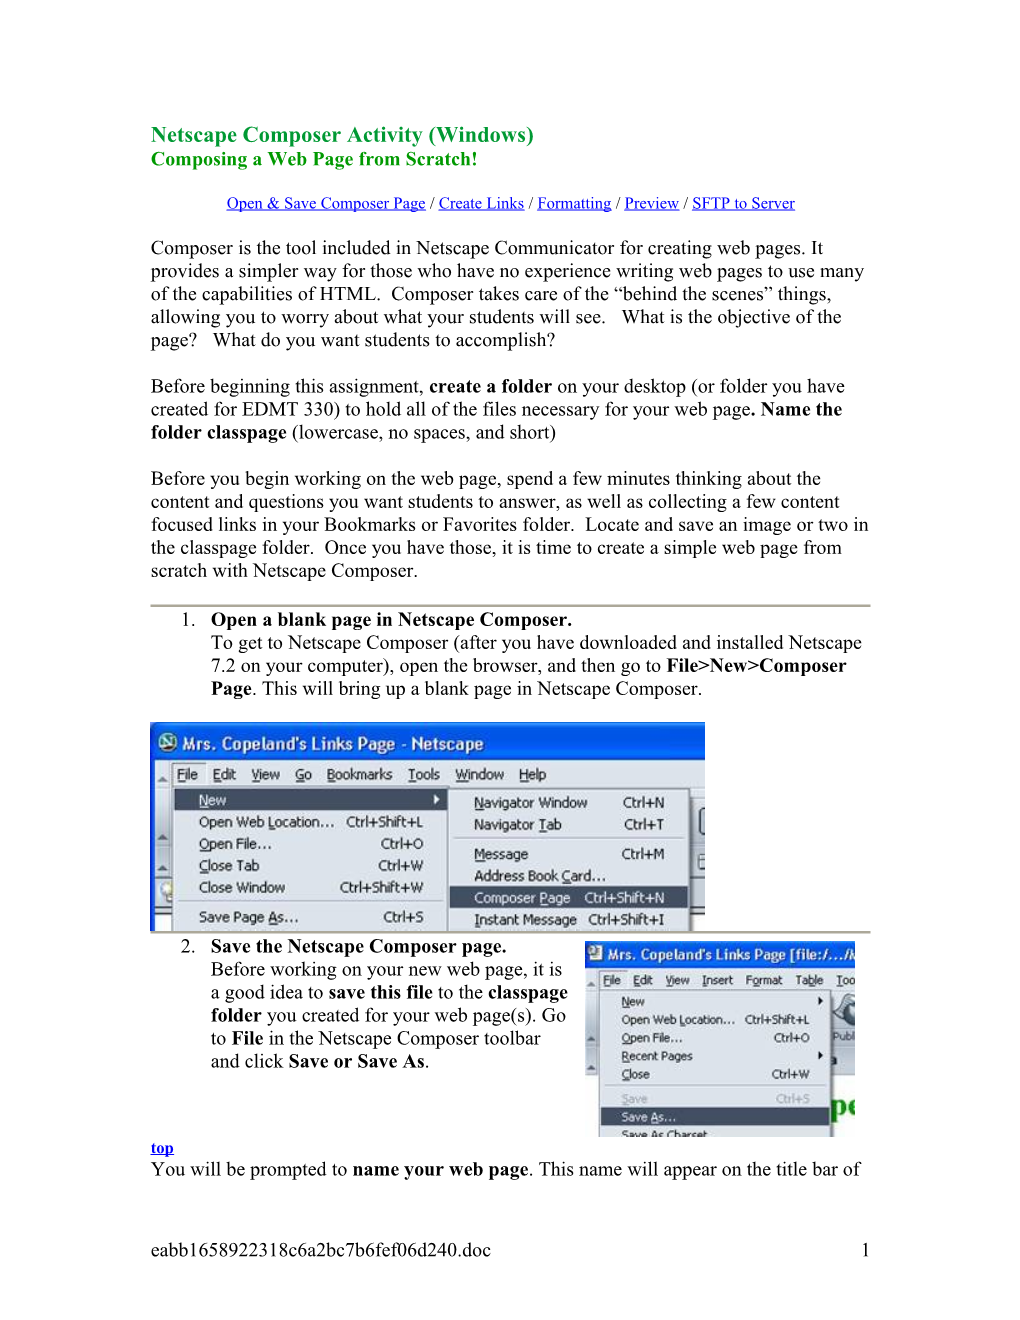 Netscape Composer on Windows